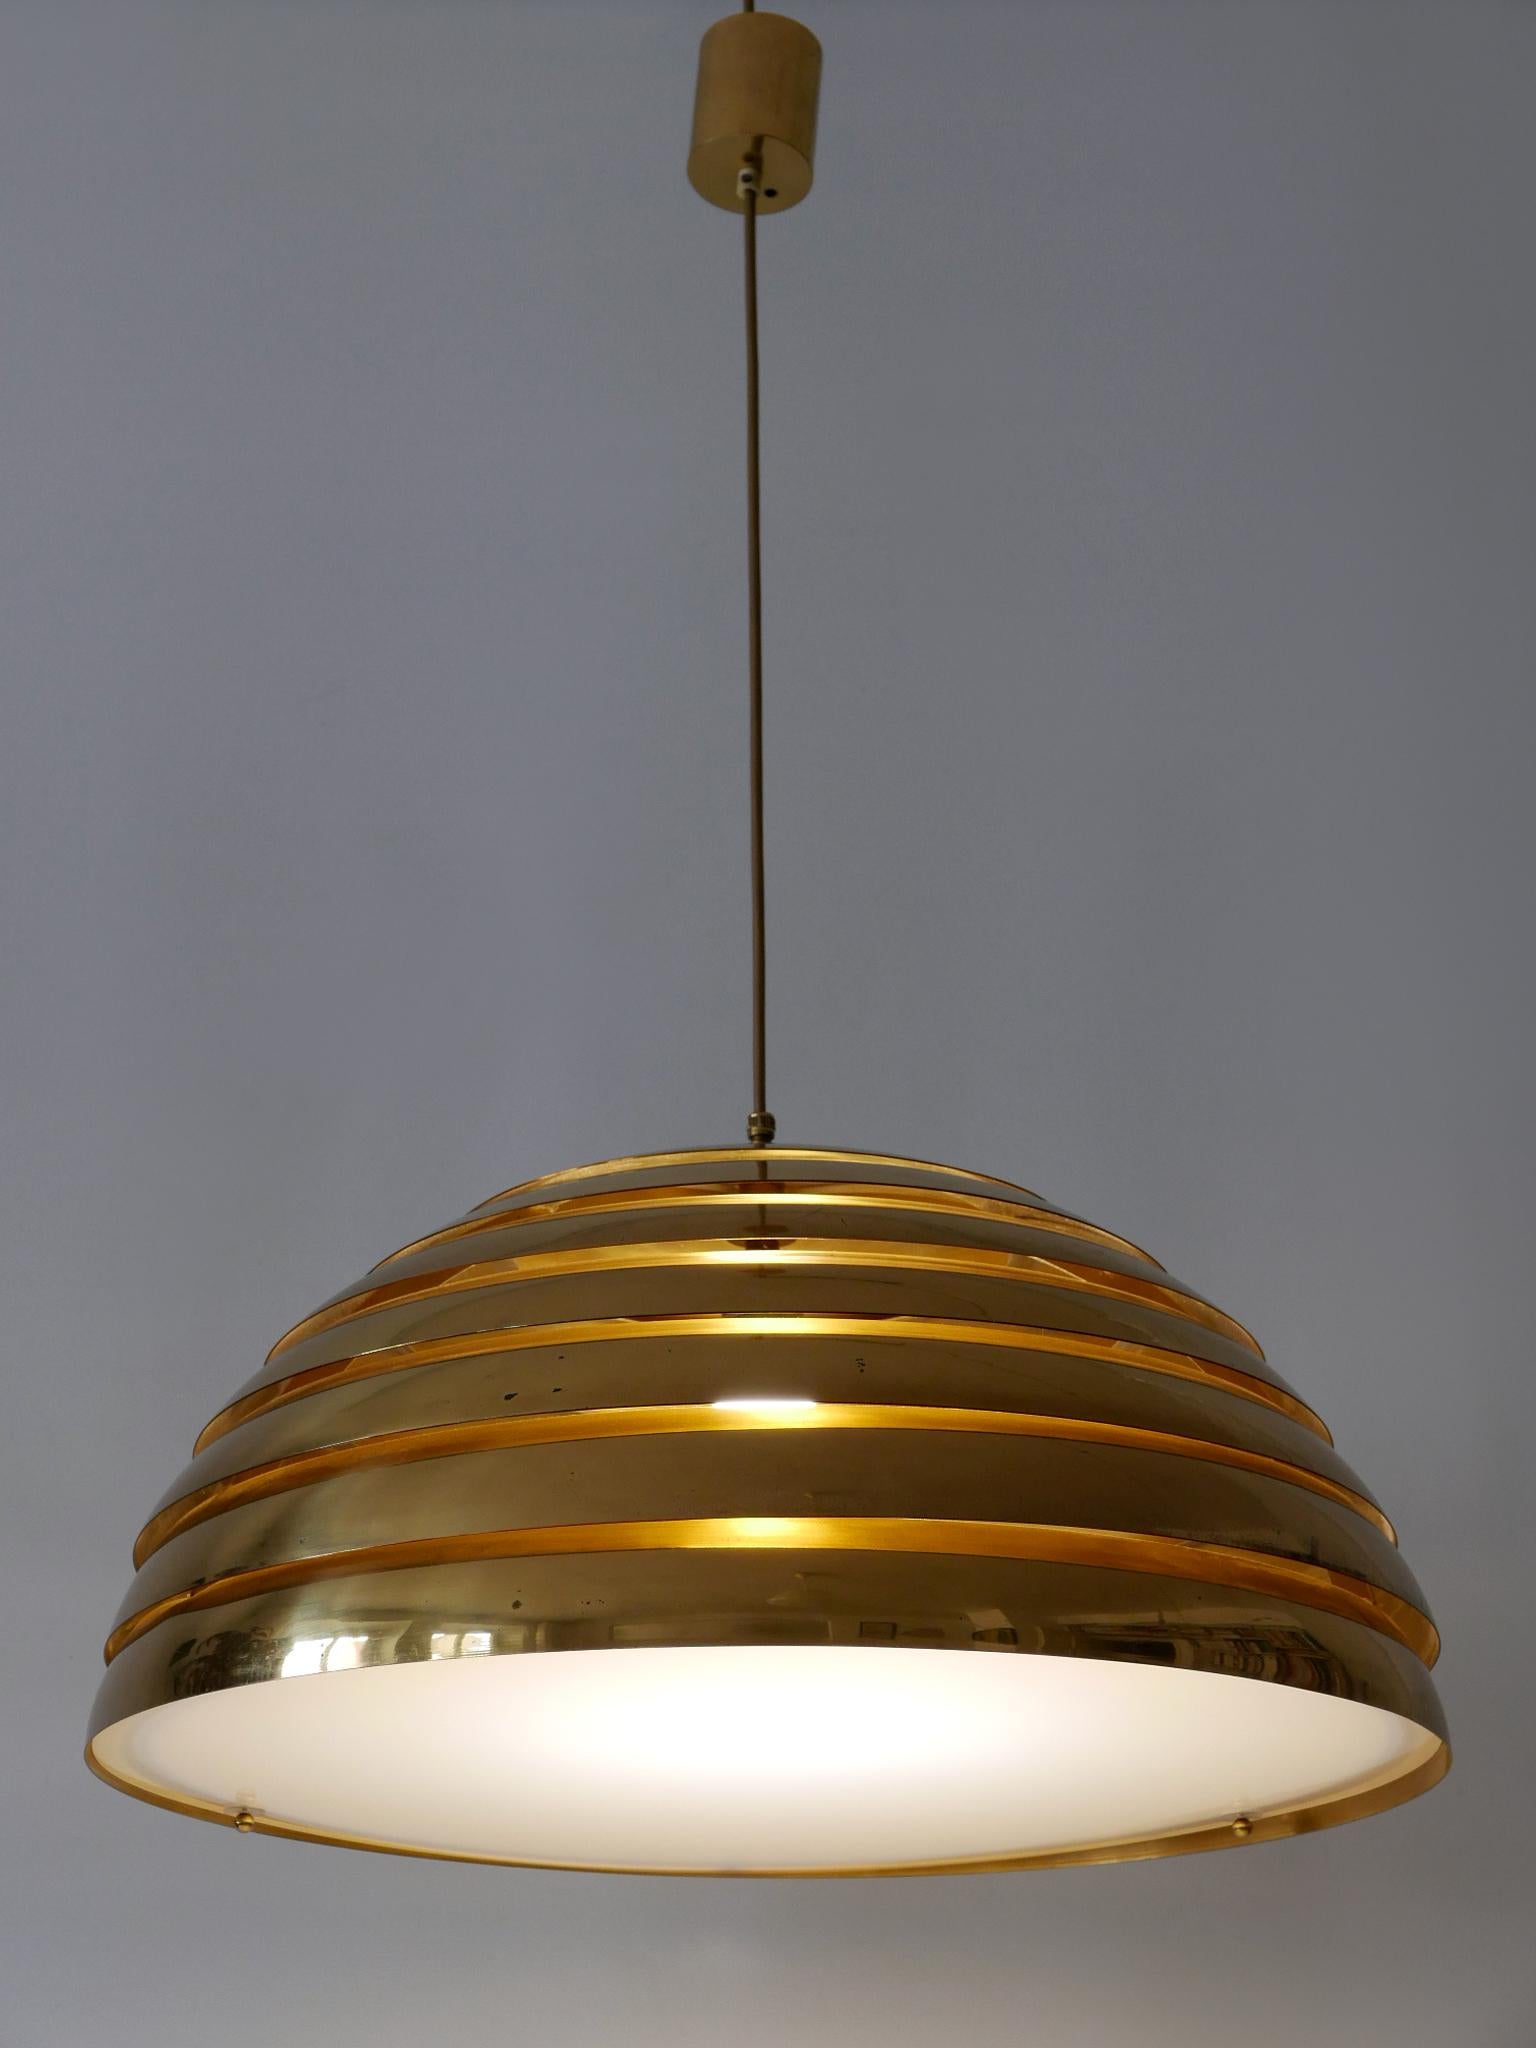 Large Mid-Century Modern Pendant Lamp by Vereinigte Werkstätten Germany 1960s For Sale 11